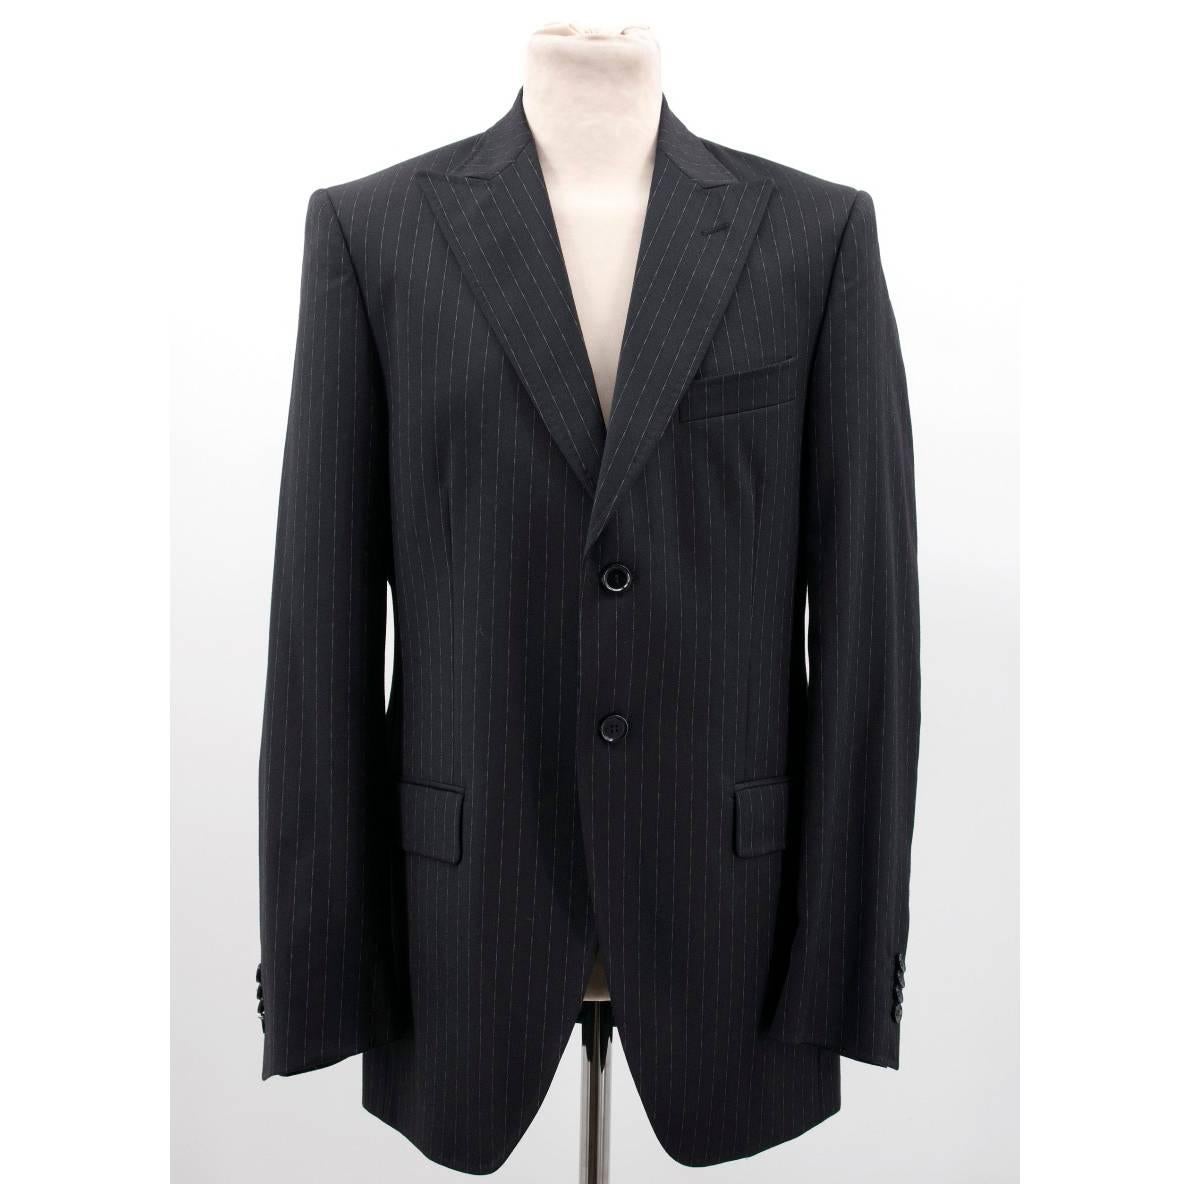 Dolce & Gabbana Black Pinstripe Suit For Sale 3